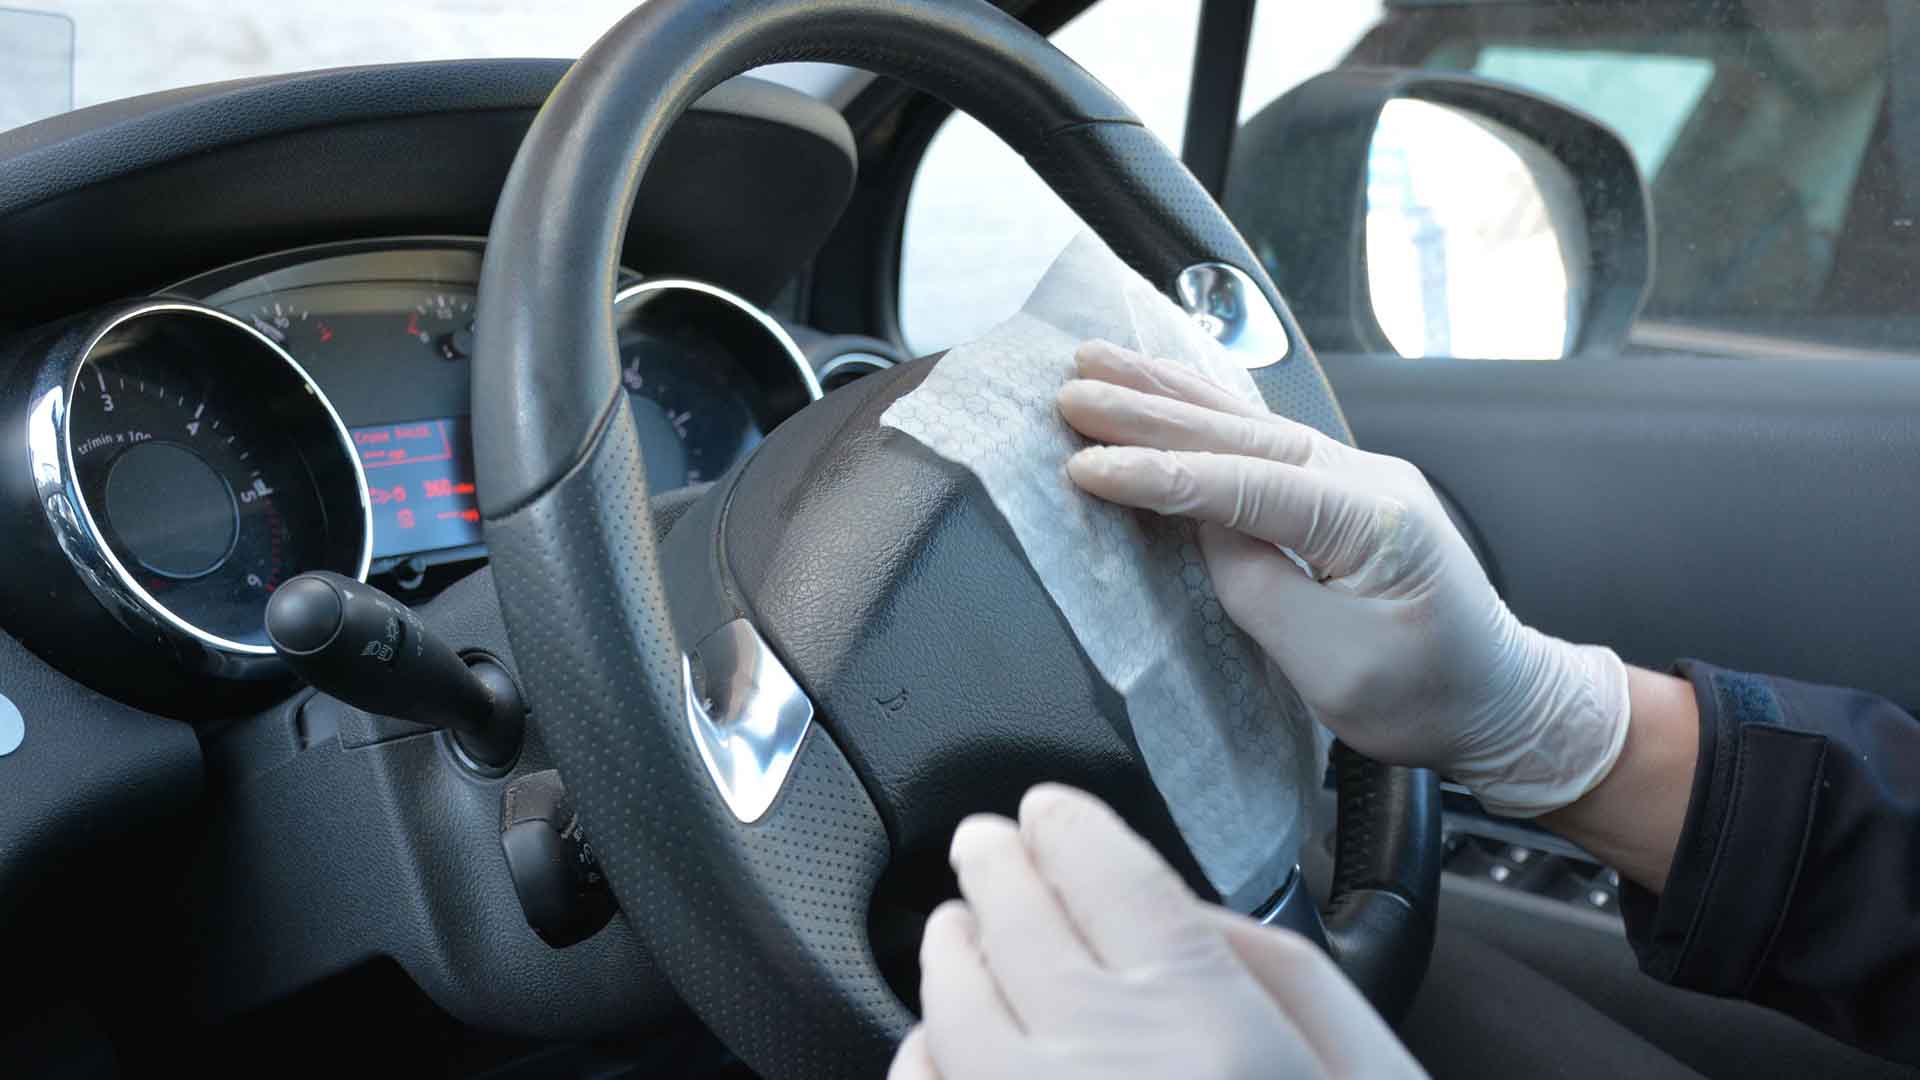 Sanitising the steering wheel